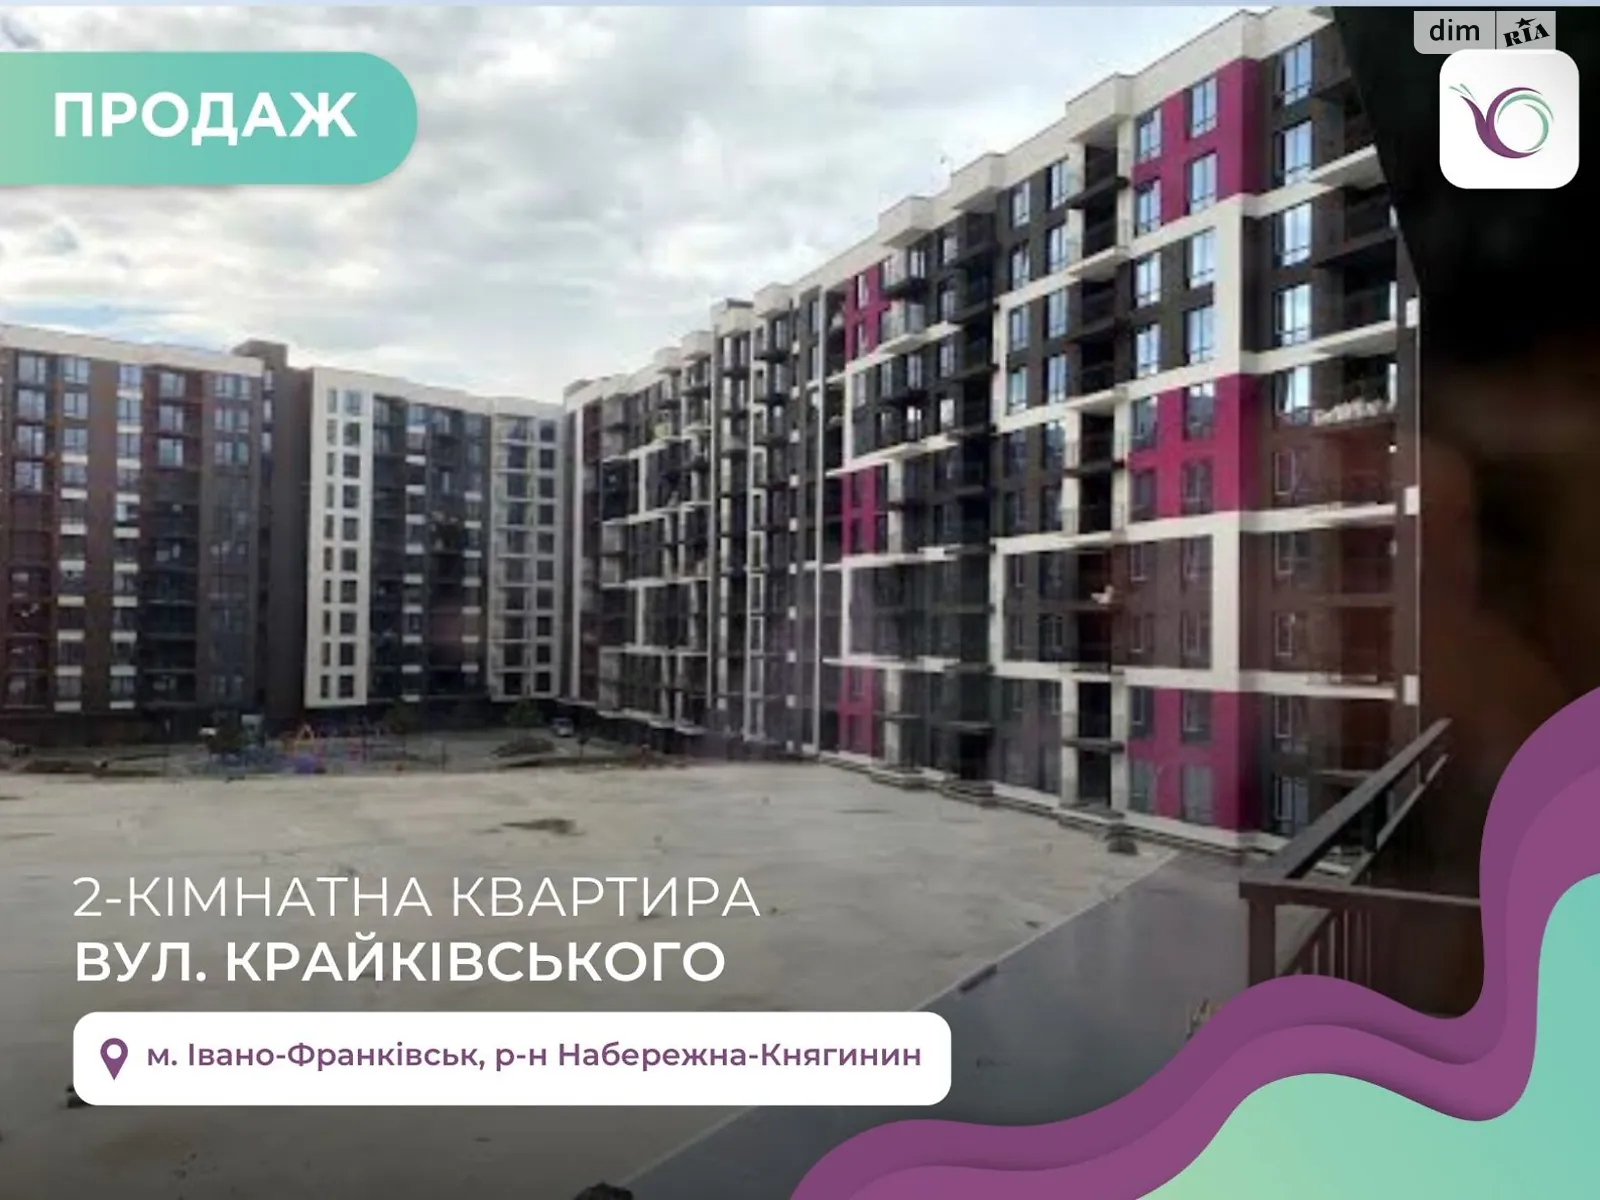 Продается 2-комнатная квартира 64.1 кв. м в Ивано-Франковске, ул. Крайковского - фото 1